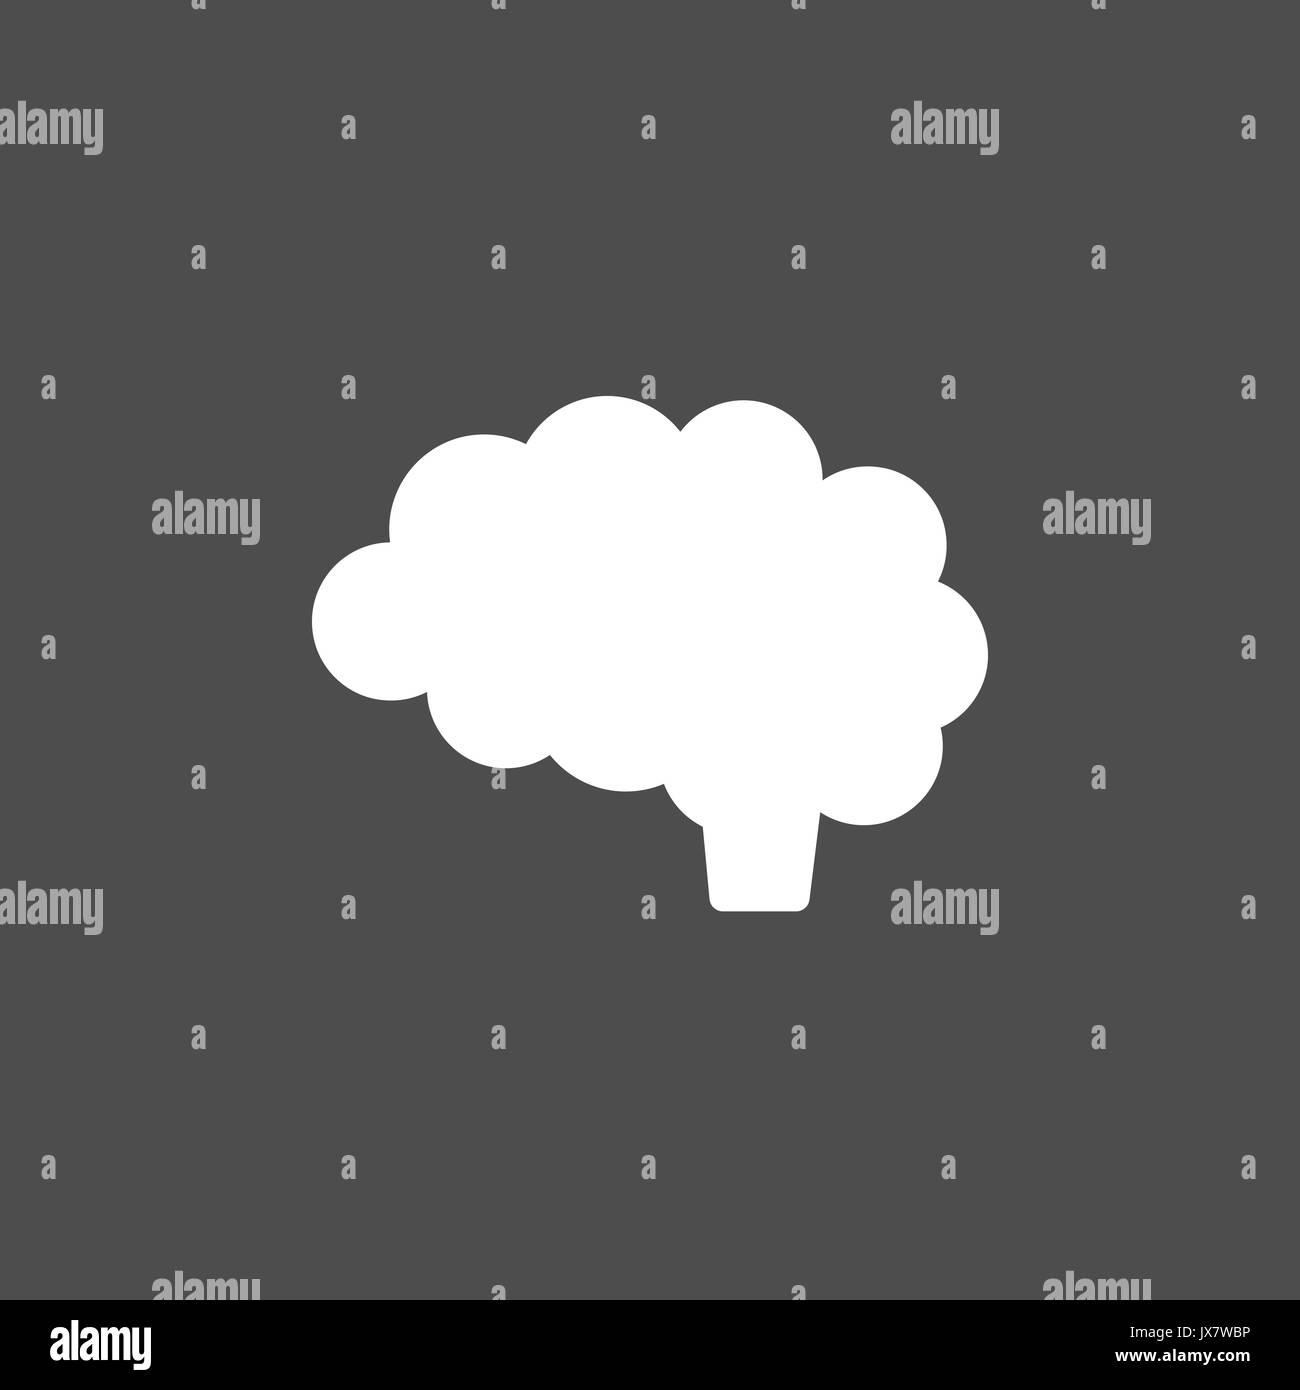 Isolated brain icon on dark background illustration Stock Vector